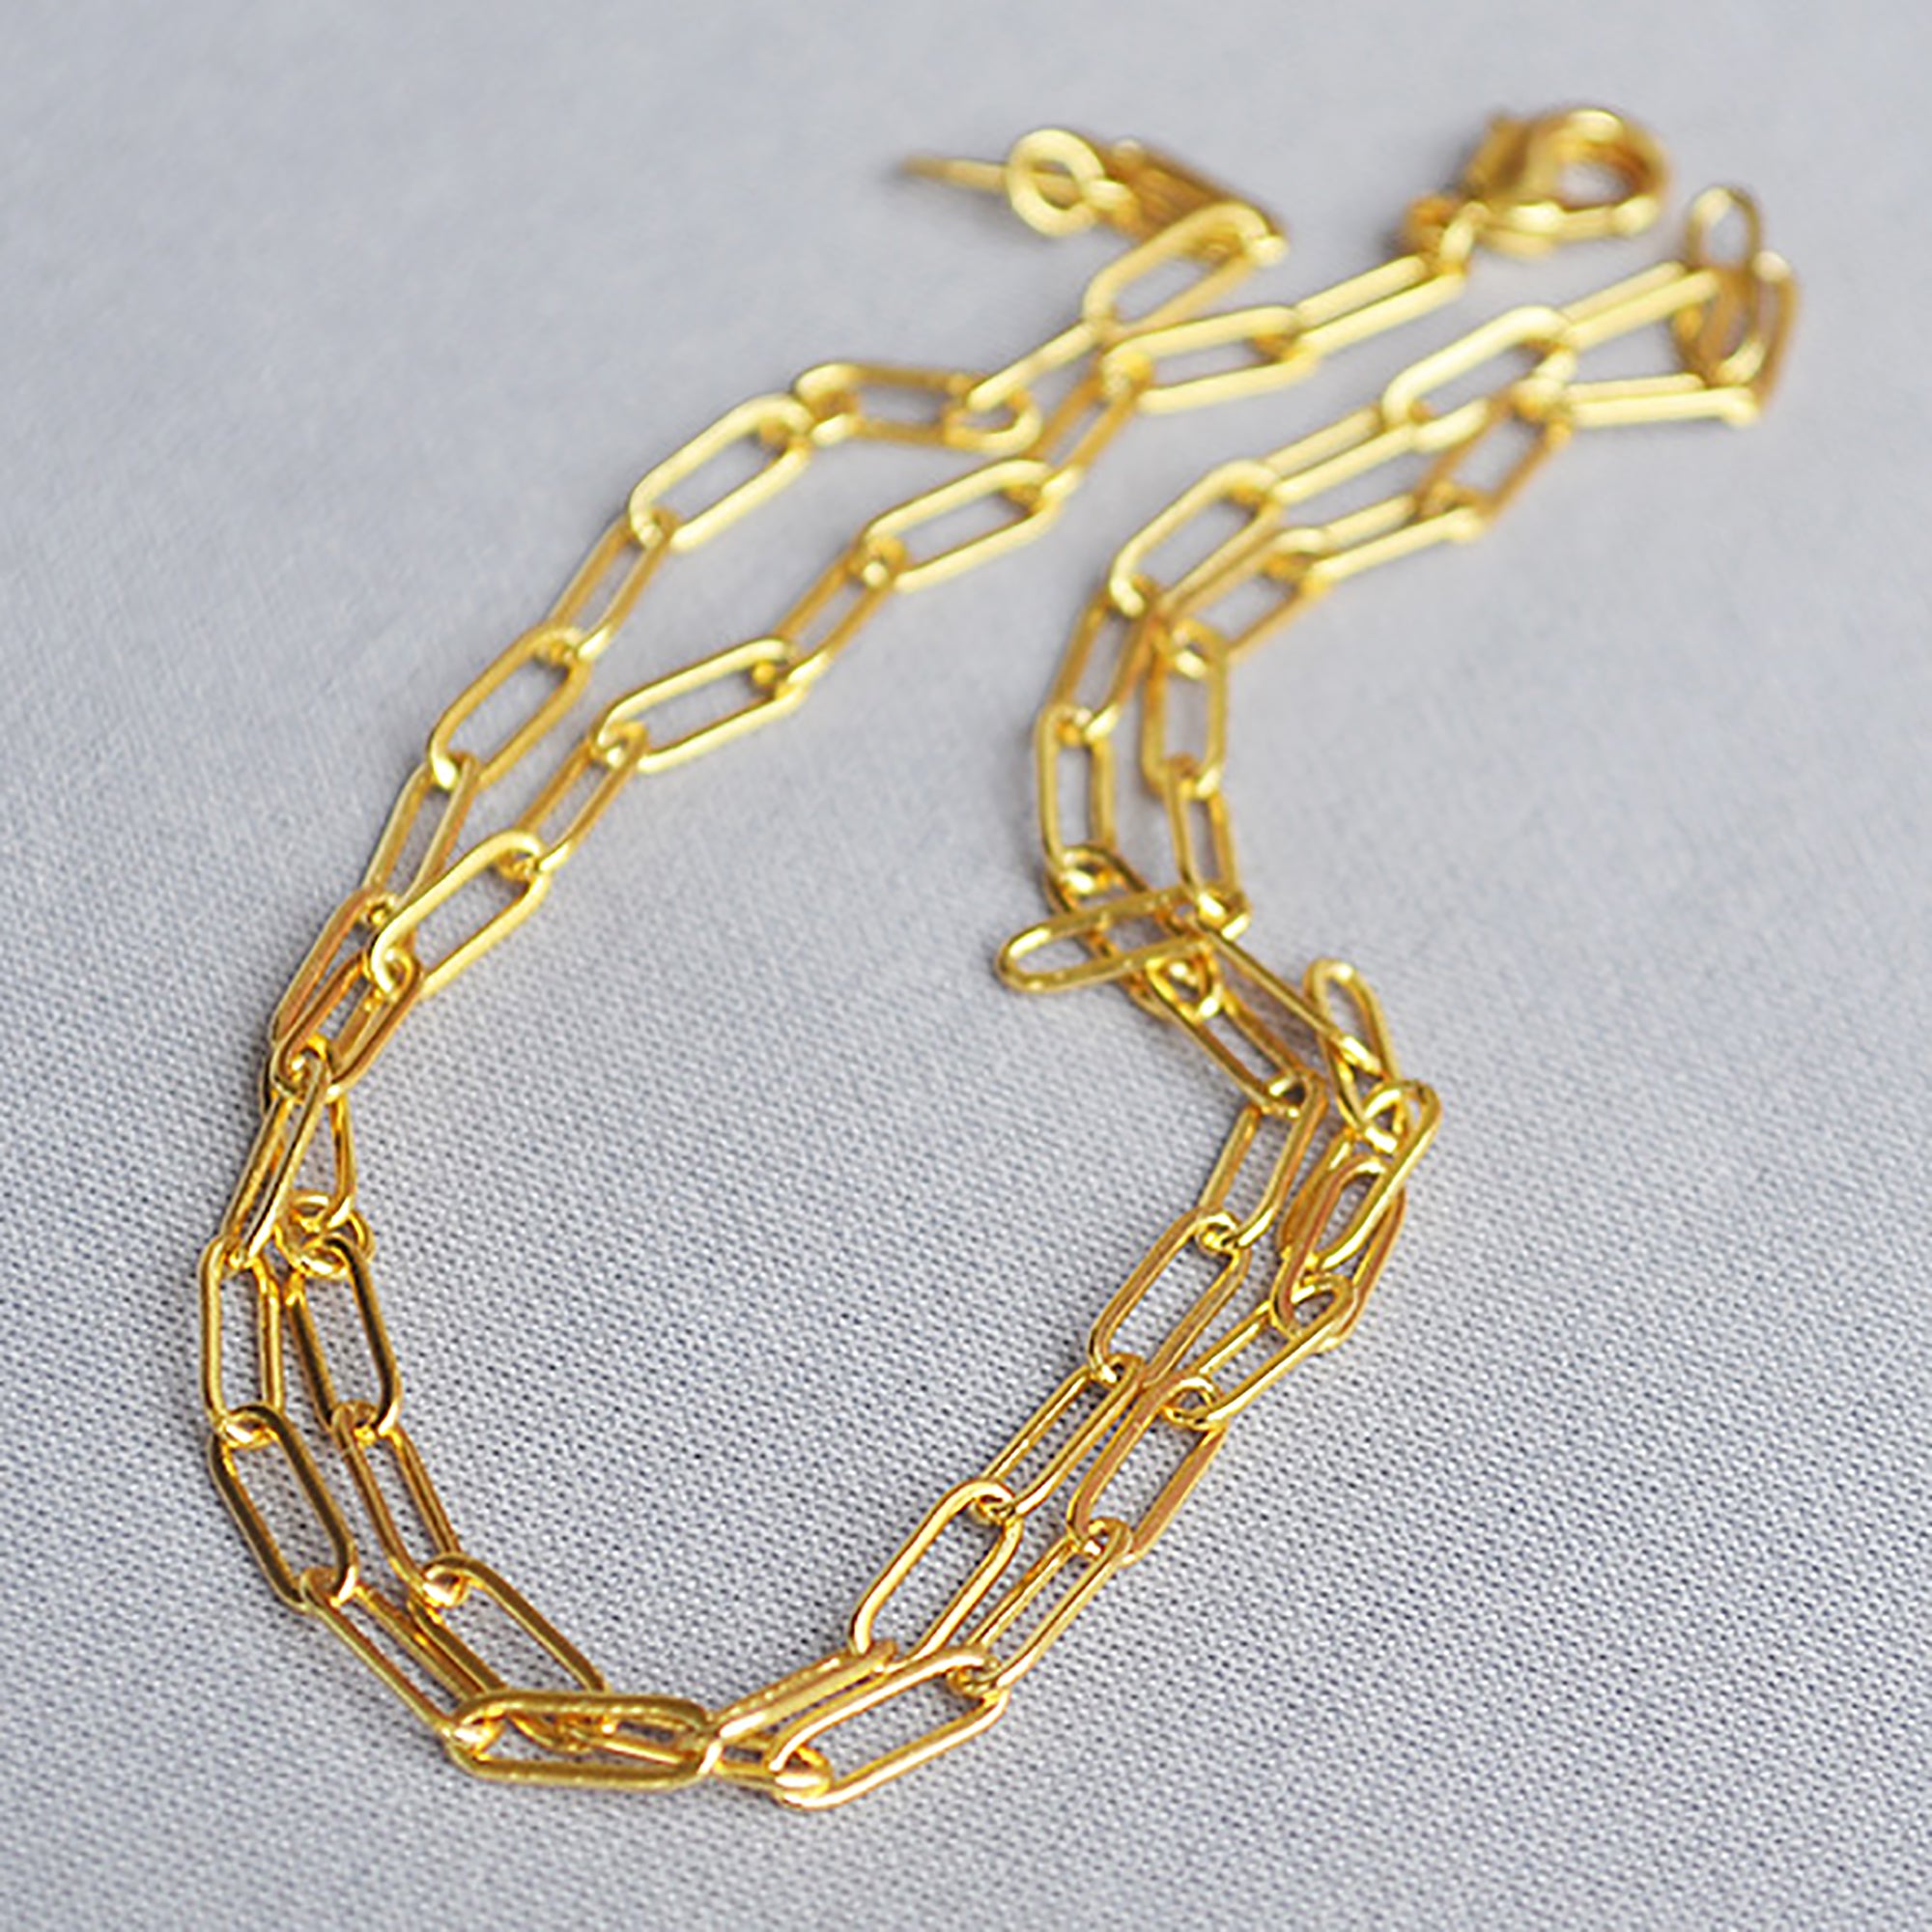 18K Gold Plated Metal Chain Necklace gift holiday season birthday valentine anniversary wedding Choker Collar